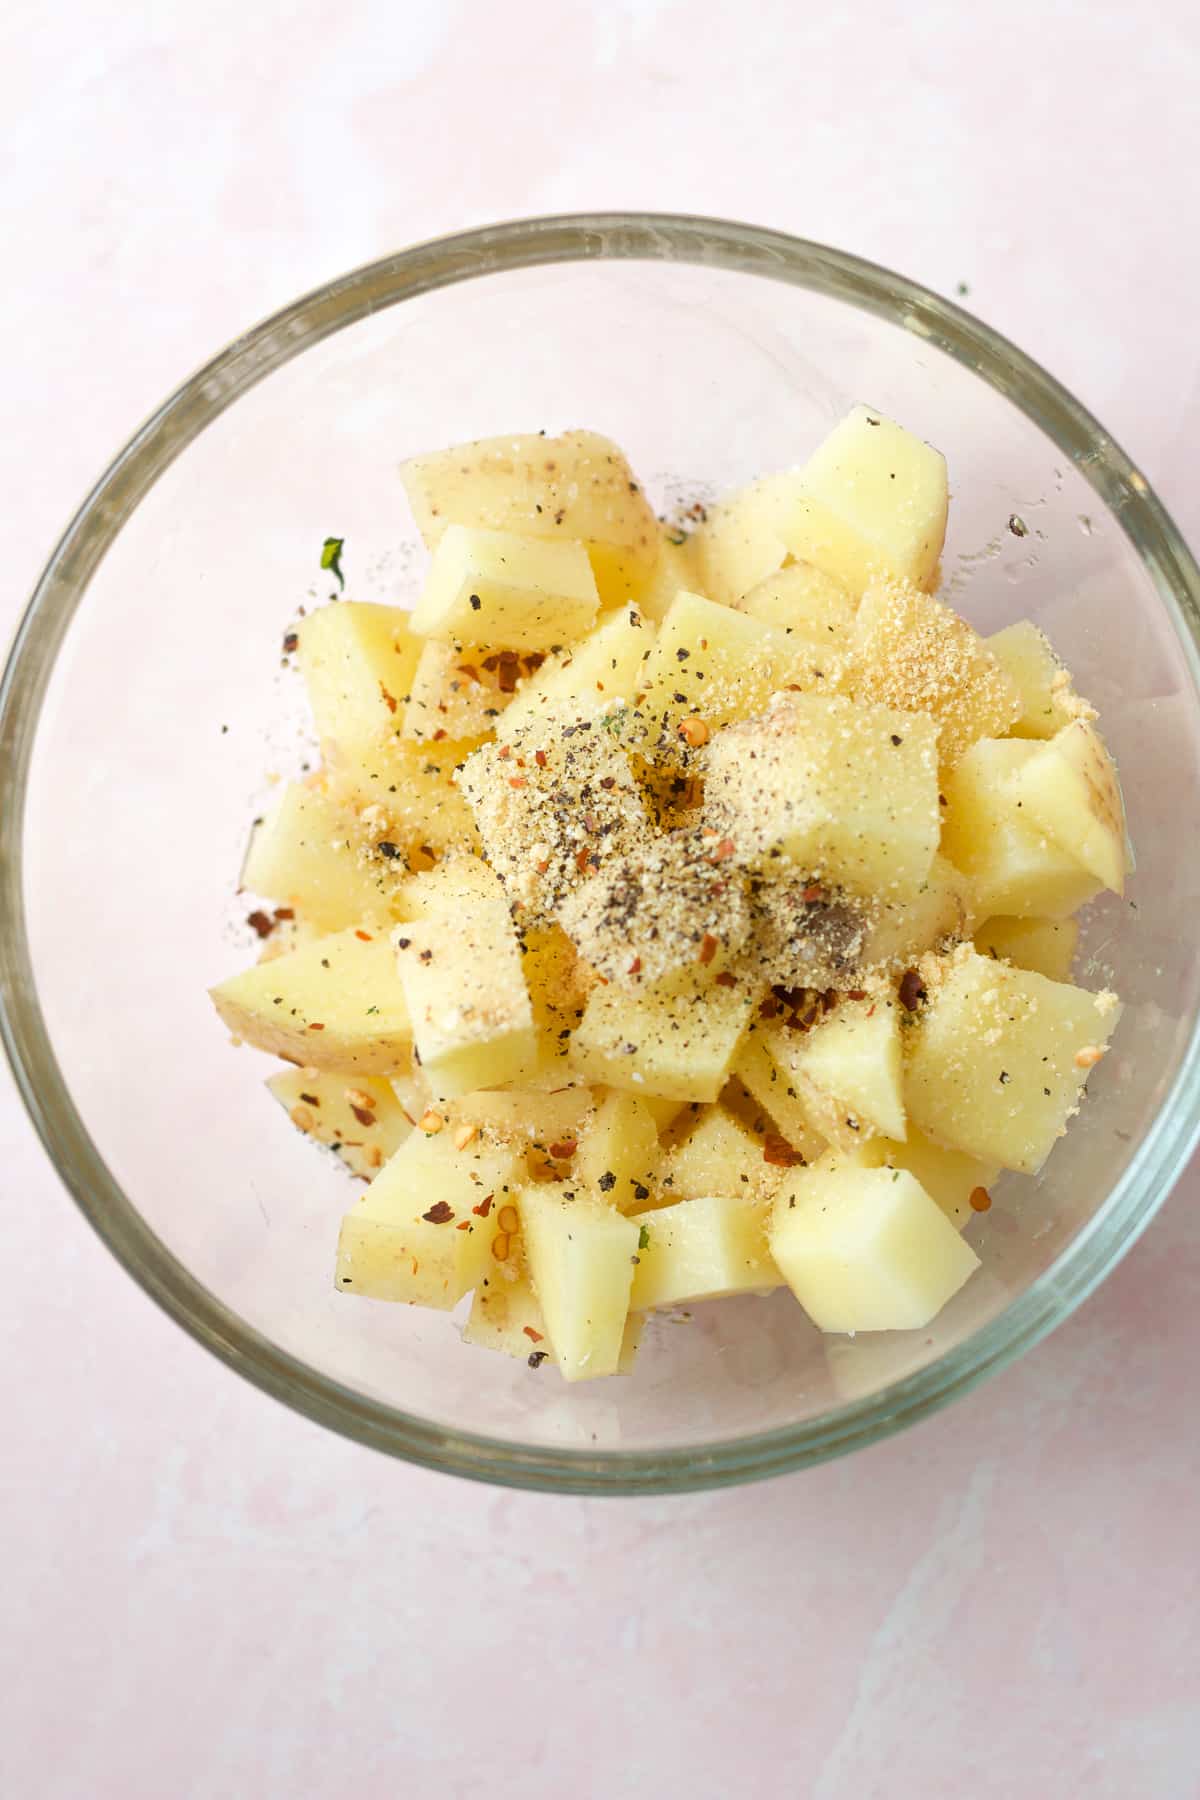 Cut raw potatoes in glass bowl with seasonings.